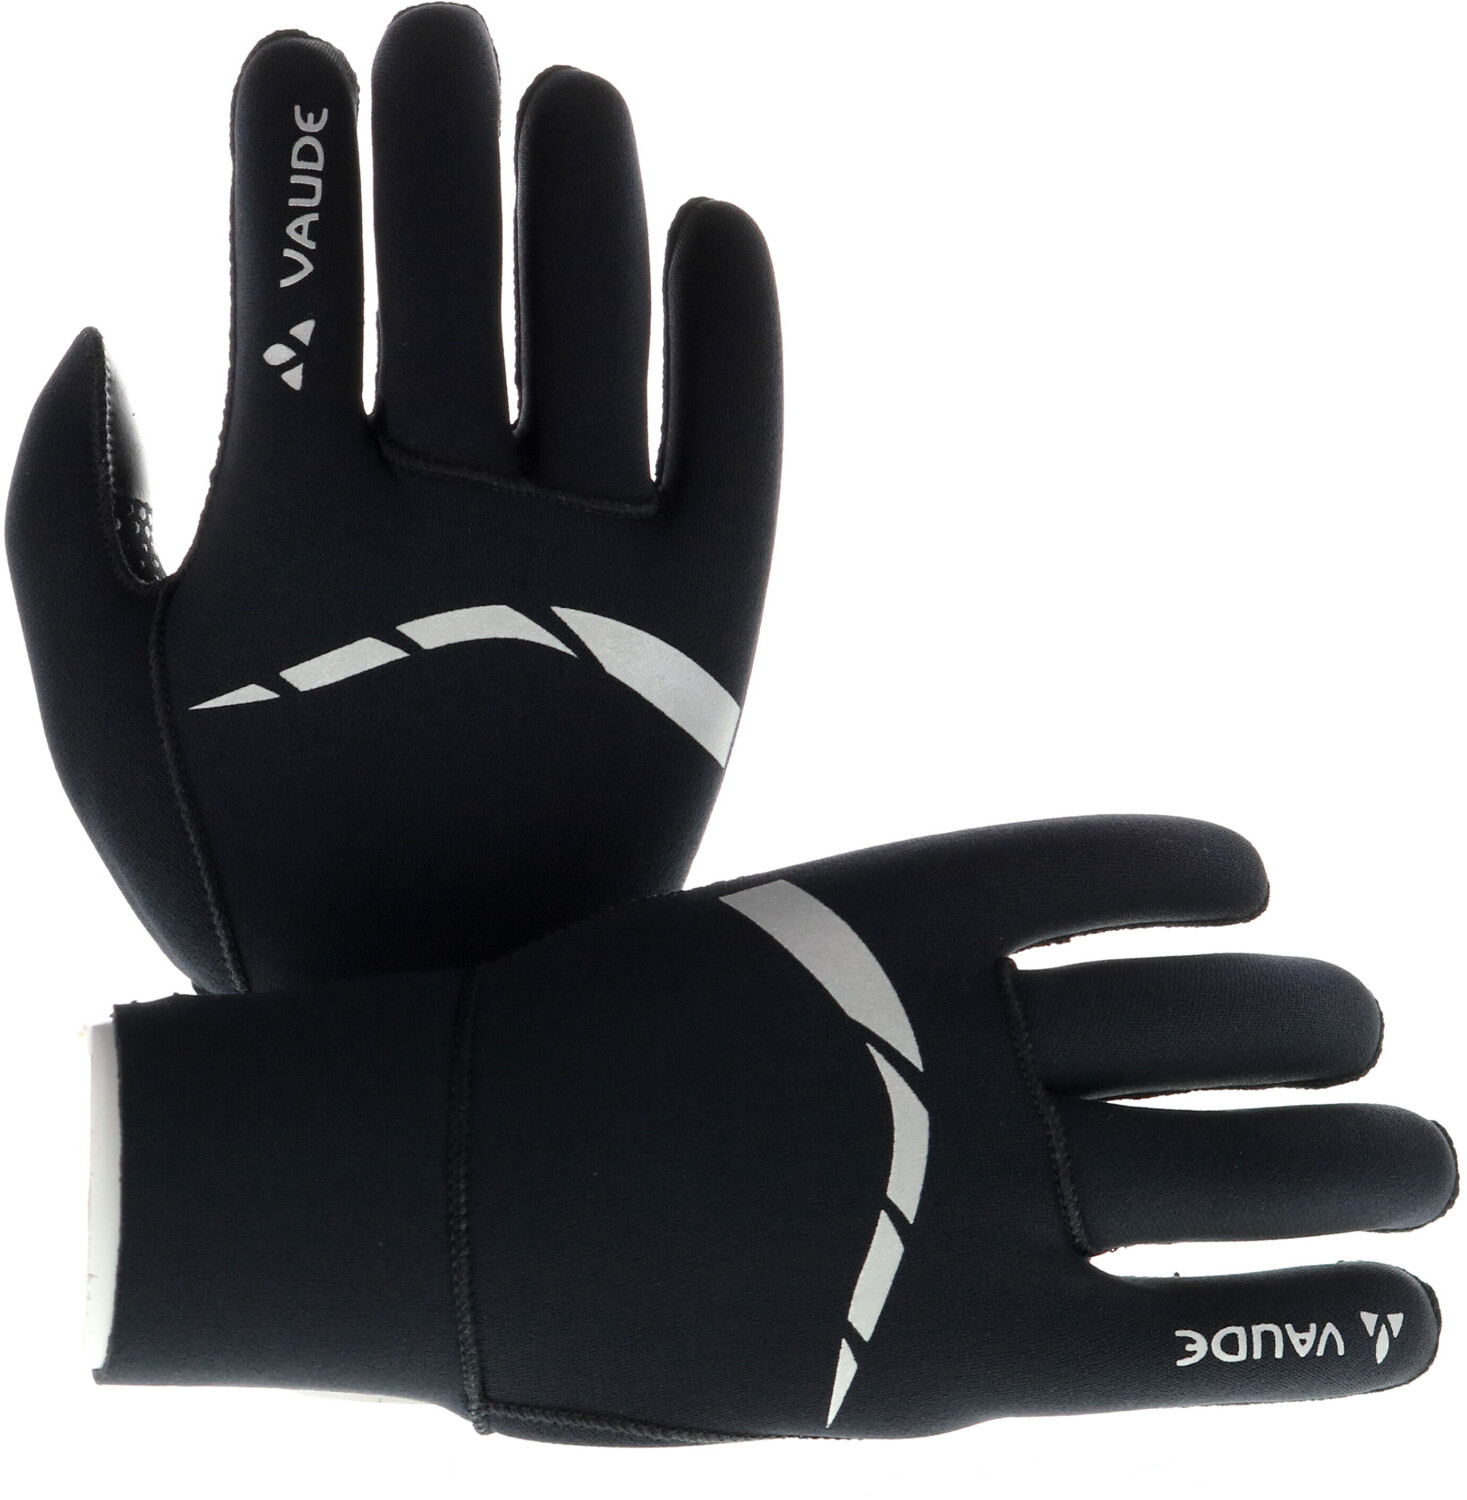 VAUDE Chronos Gloves black ab 16,78 € | Preisvergleich bei